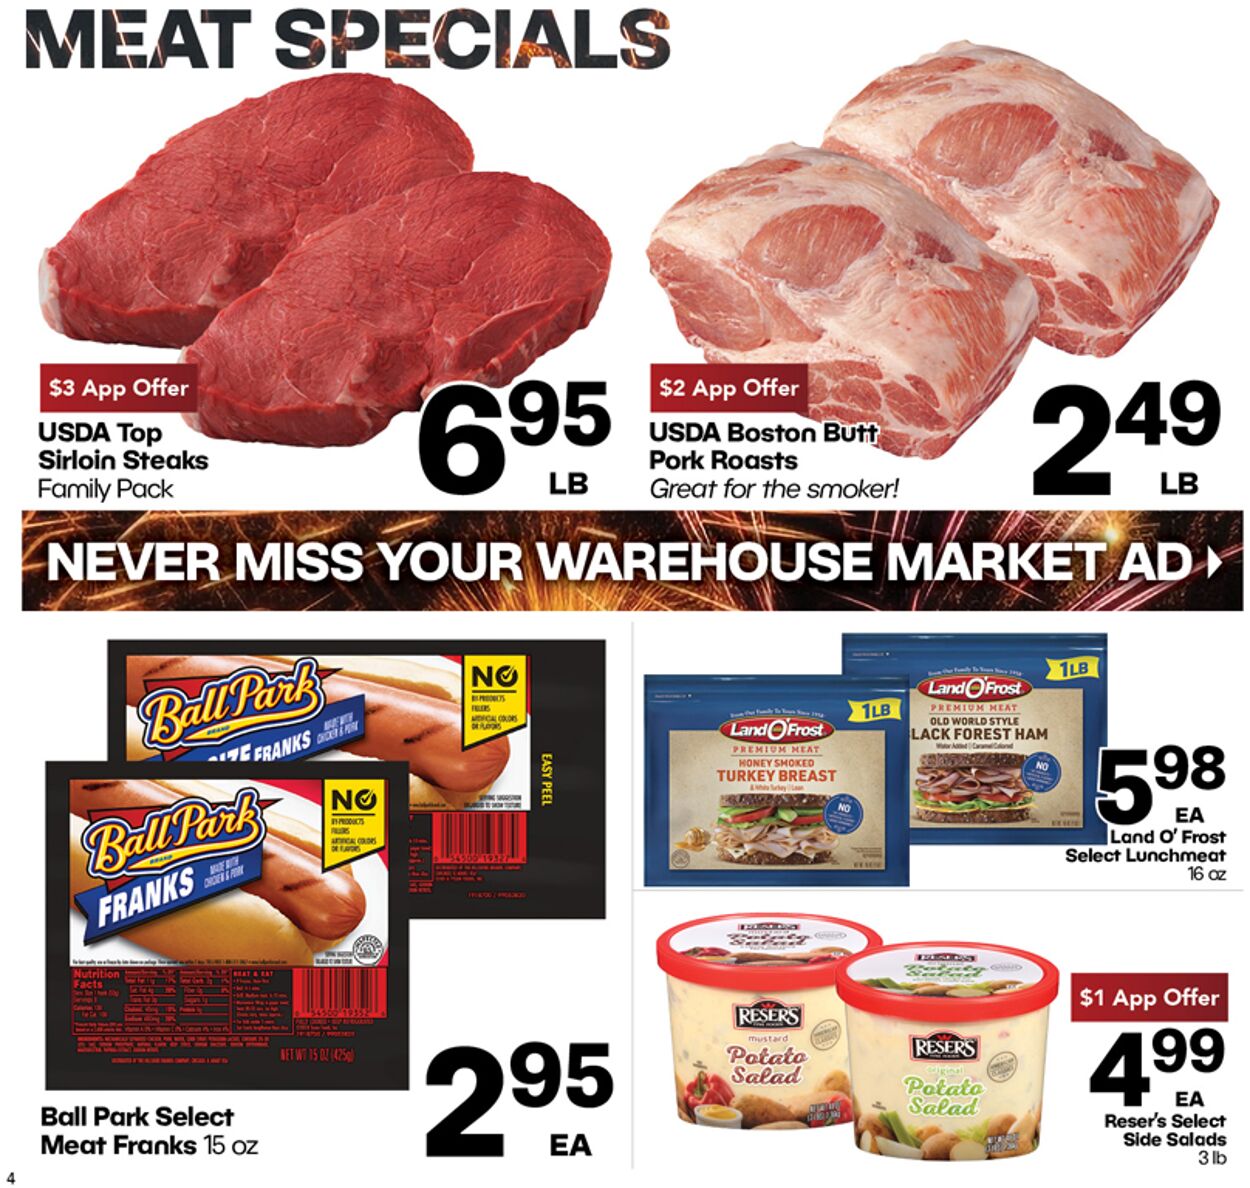 Weekly ad Warehouse Market 07/03/2024 - 07/09/2024